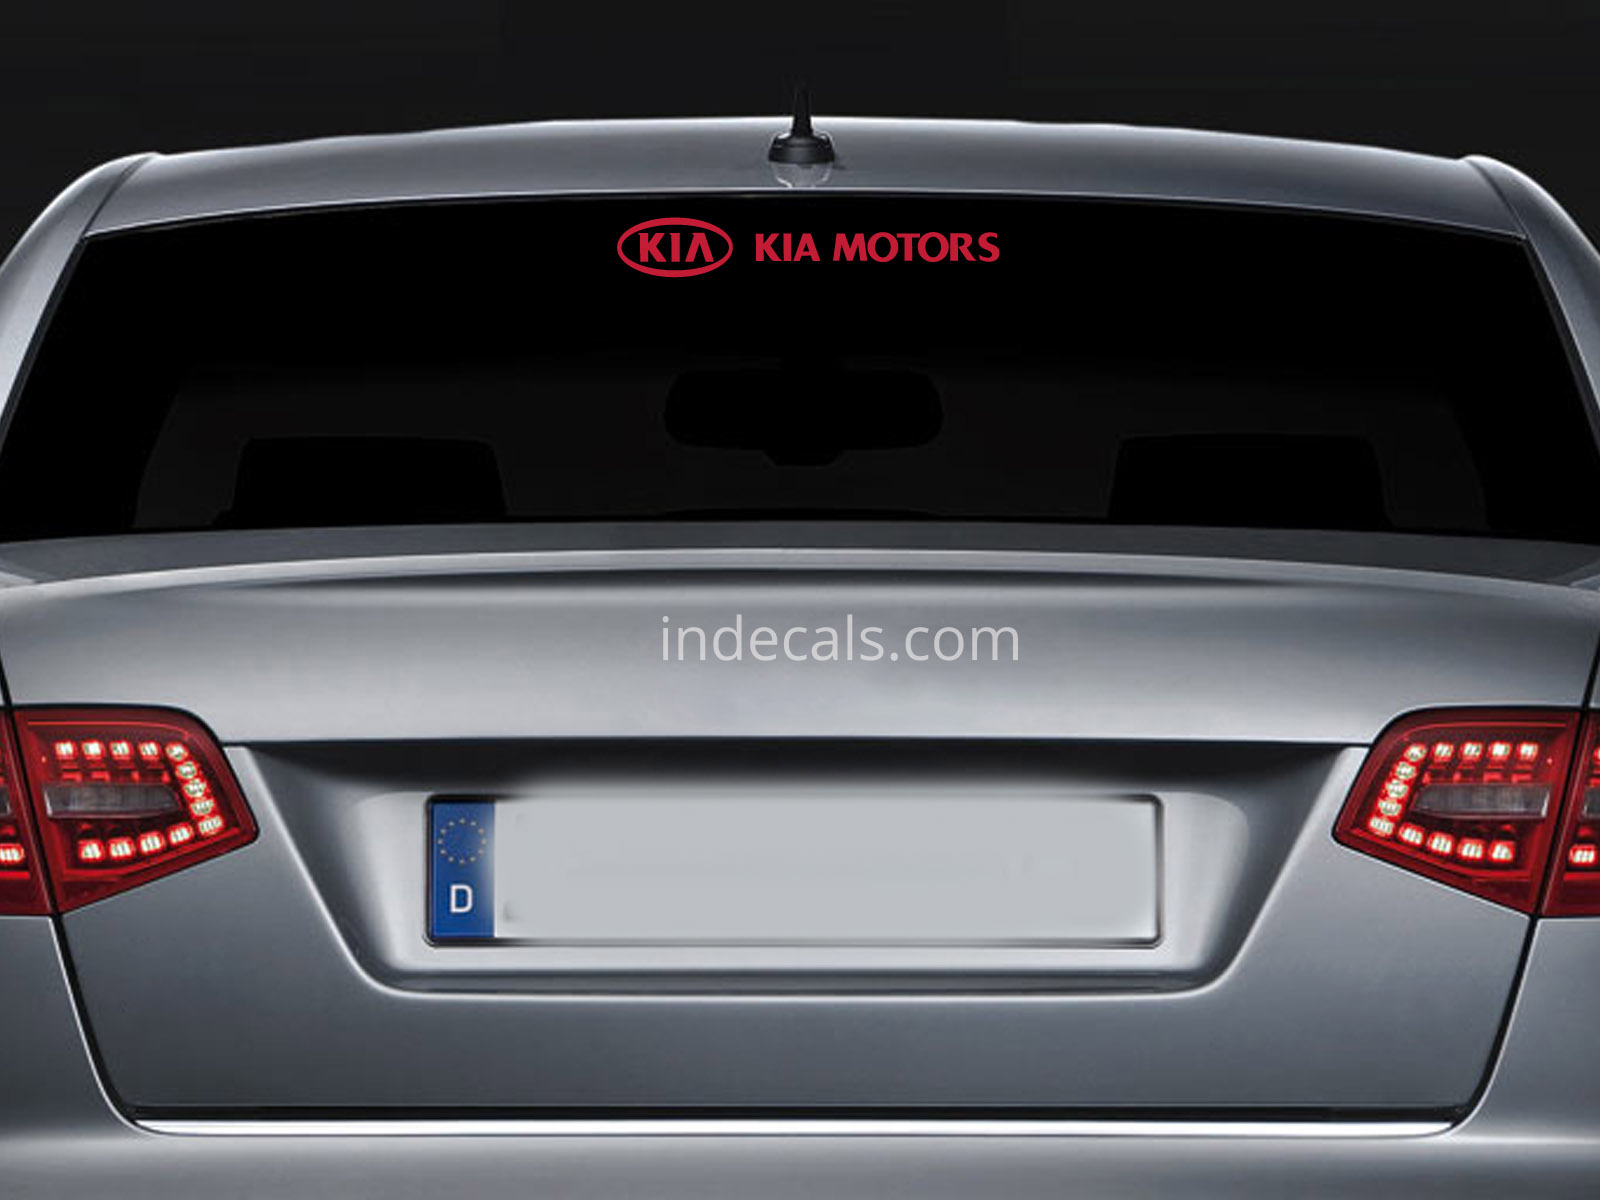 1 x Kia Sticker for Windshield or Back Window - Red